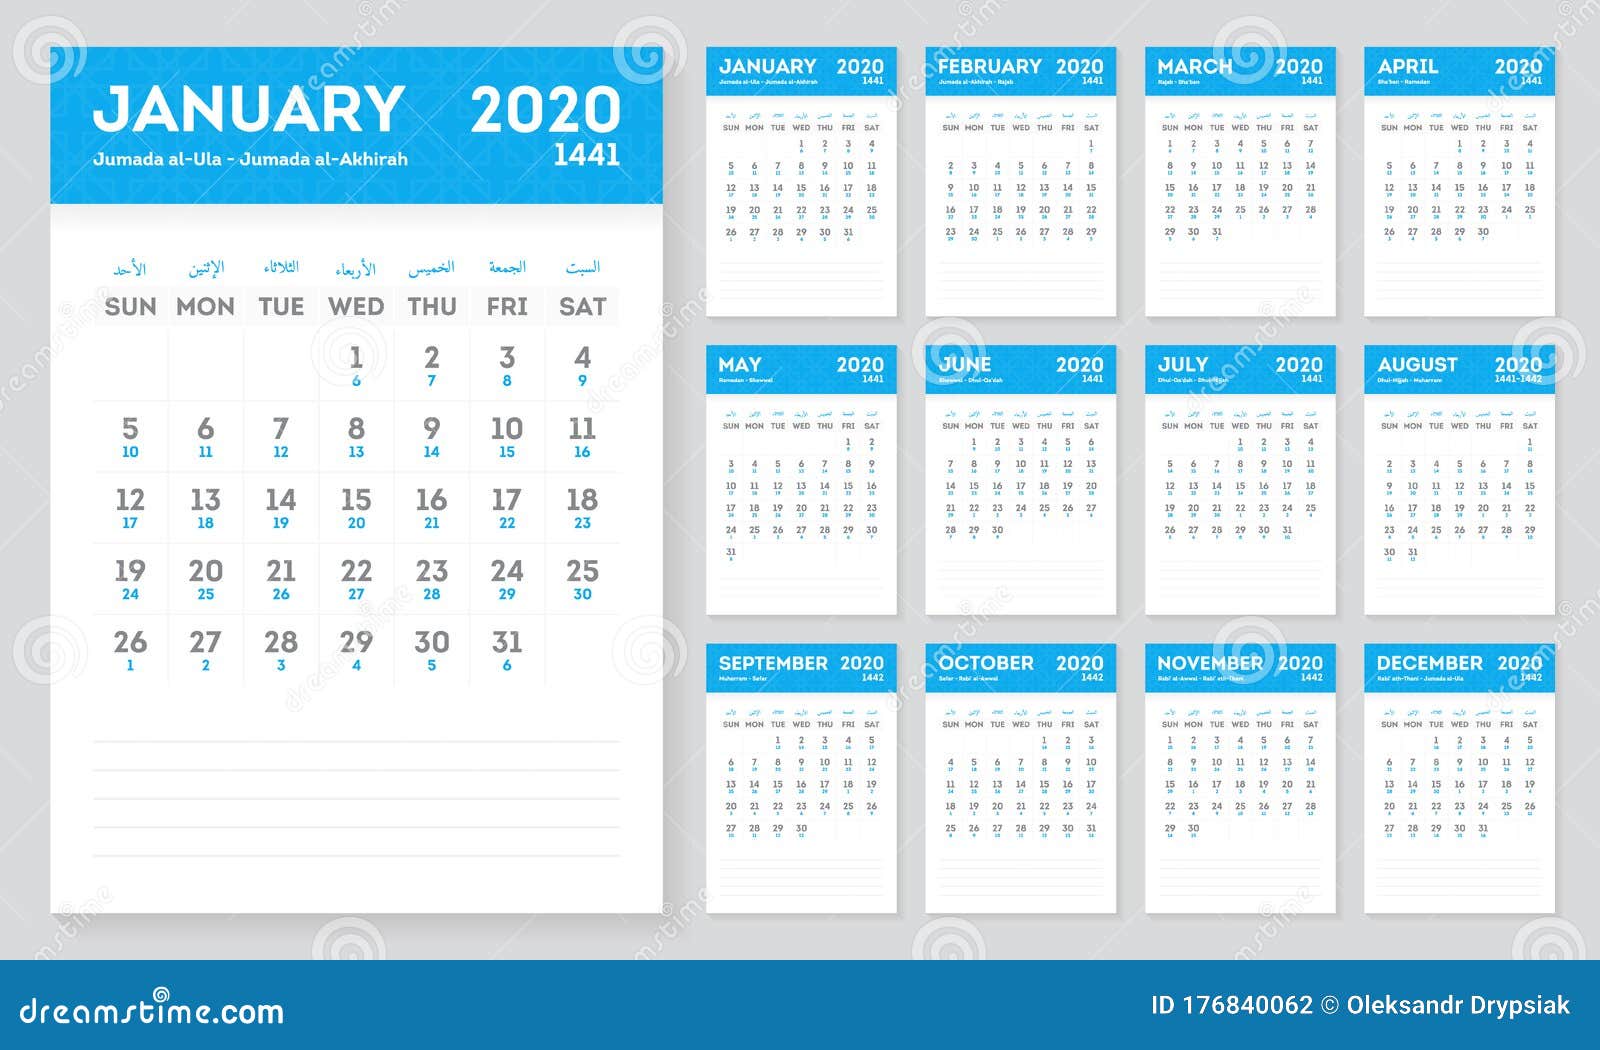 Islamic Calendar Year 2020 1441 Hijri and Gregorian Calendar Stock